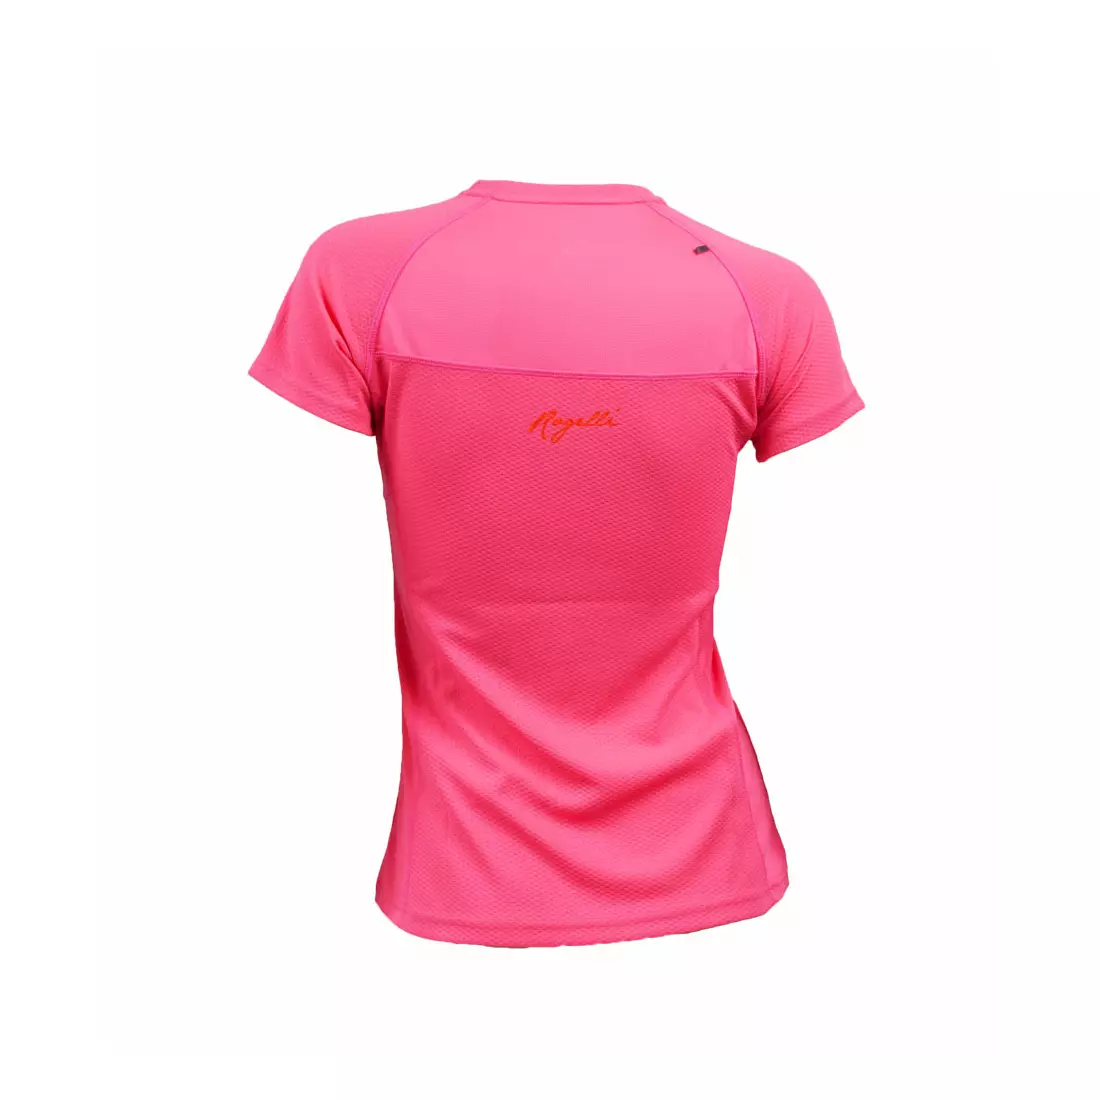 ROGELLI RUN SIRA - női futópóló - színe: Fluorine pink